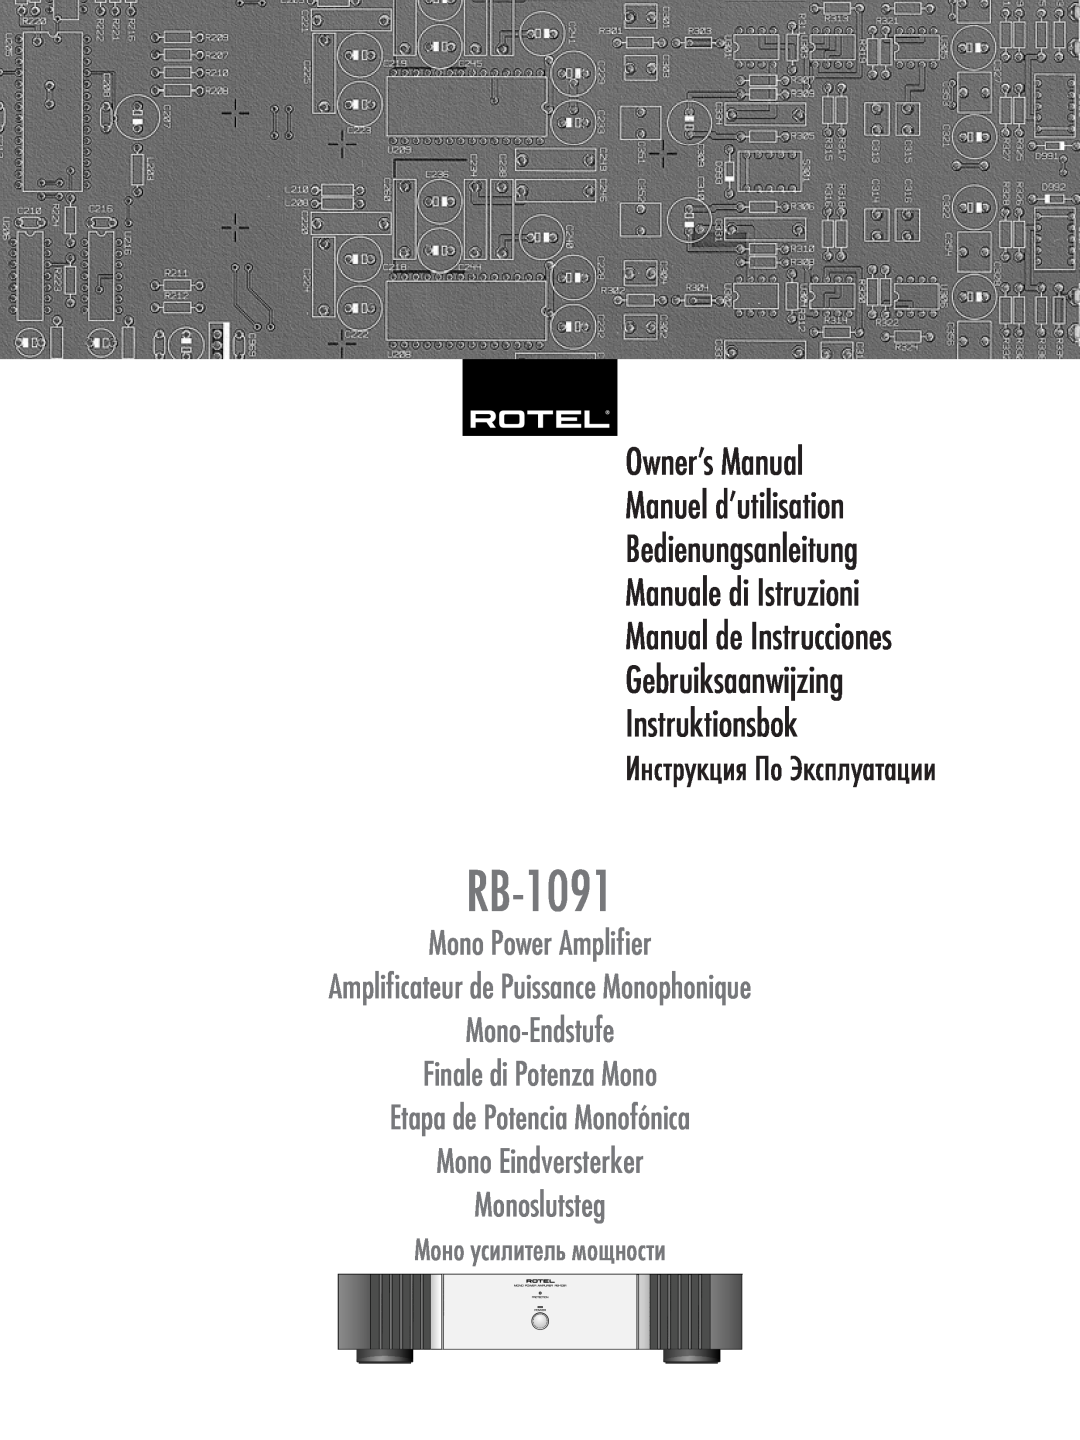 Rotel RB-1091 owner manual Bedienungsanleitung Manuale di Istruzioni, Manual de Instrucciones Gebruiksaanwijzing 